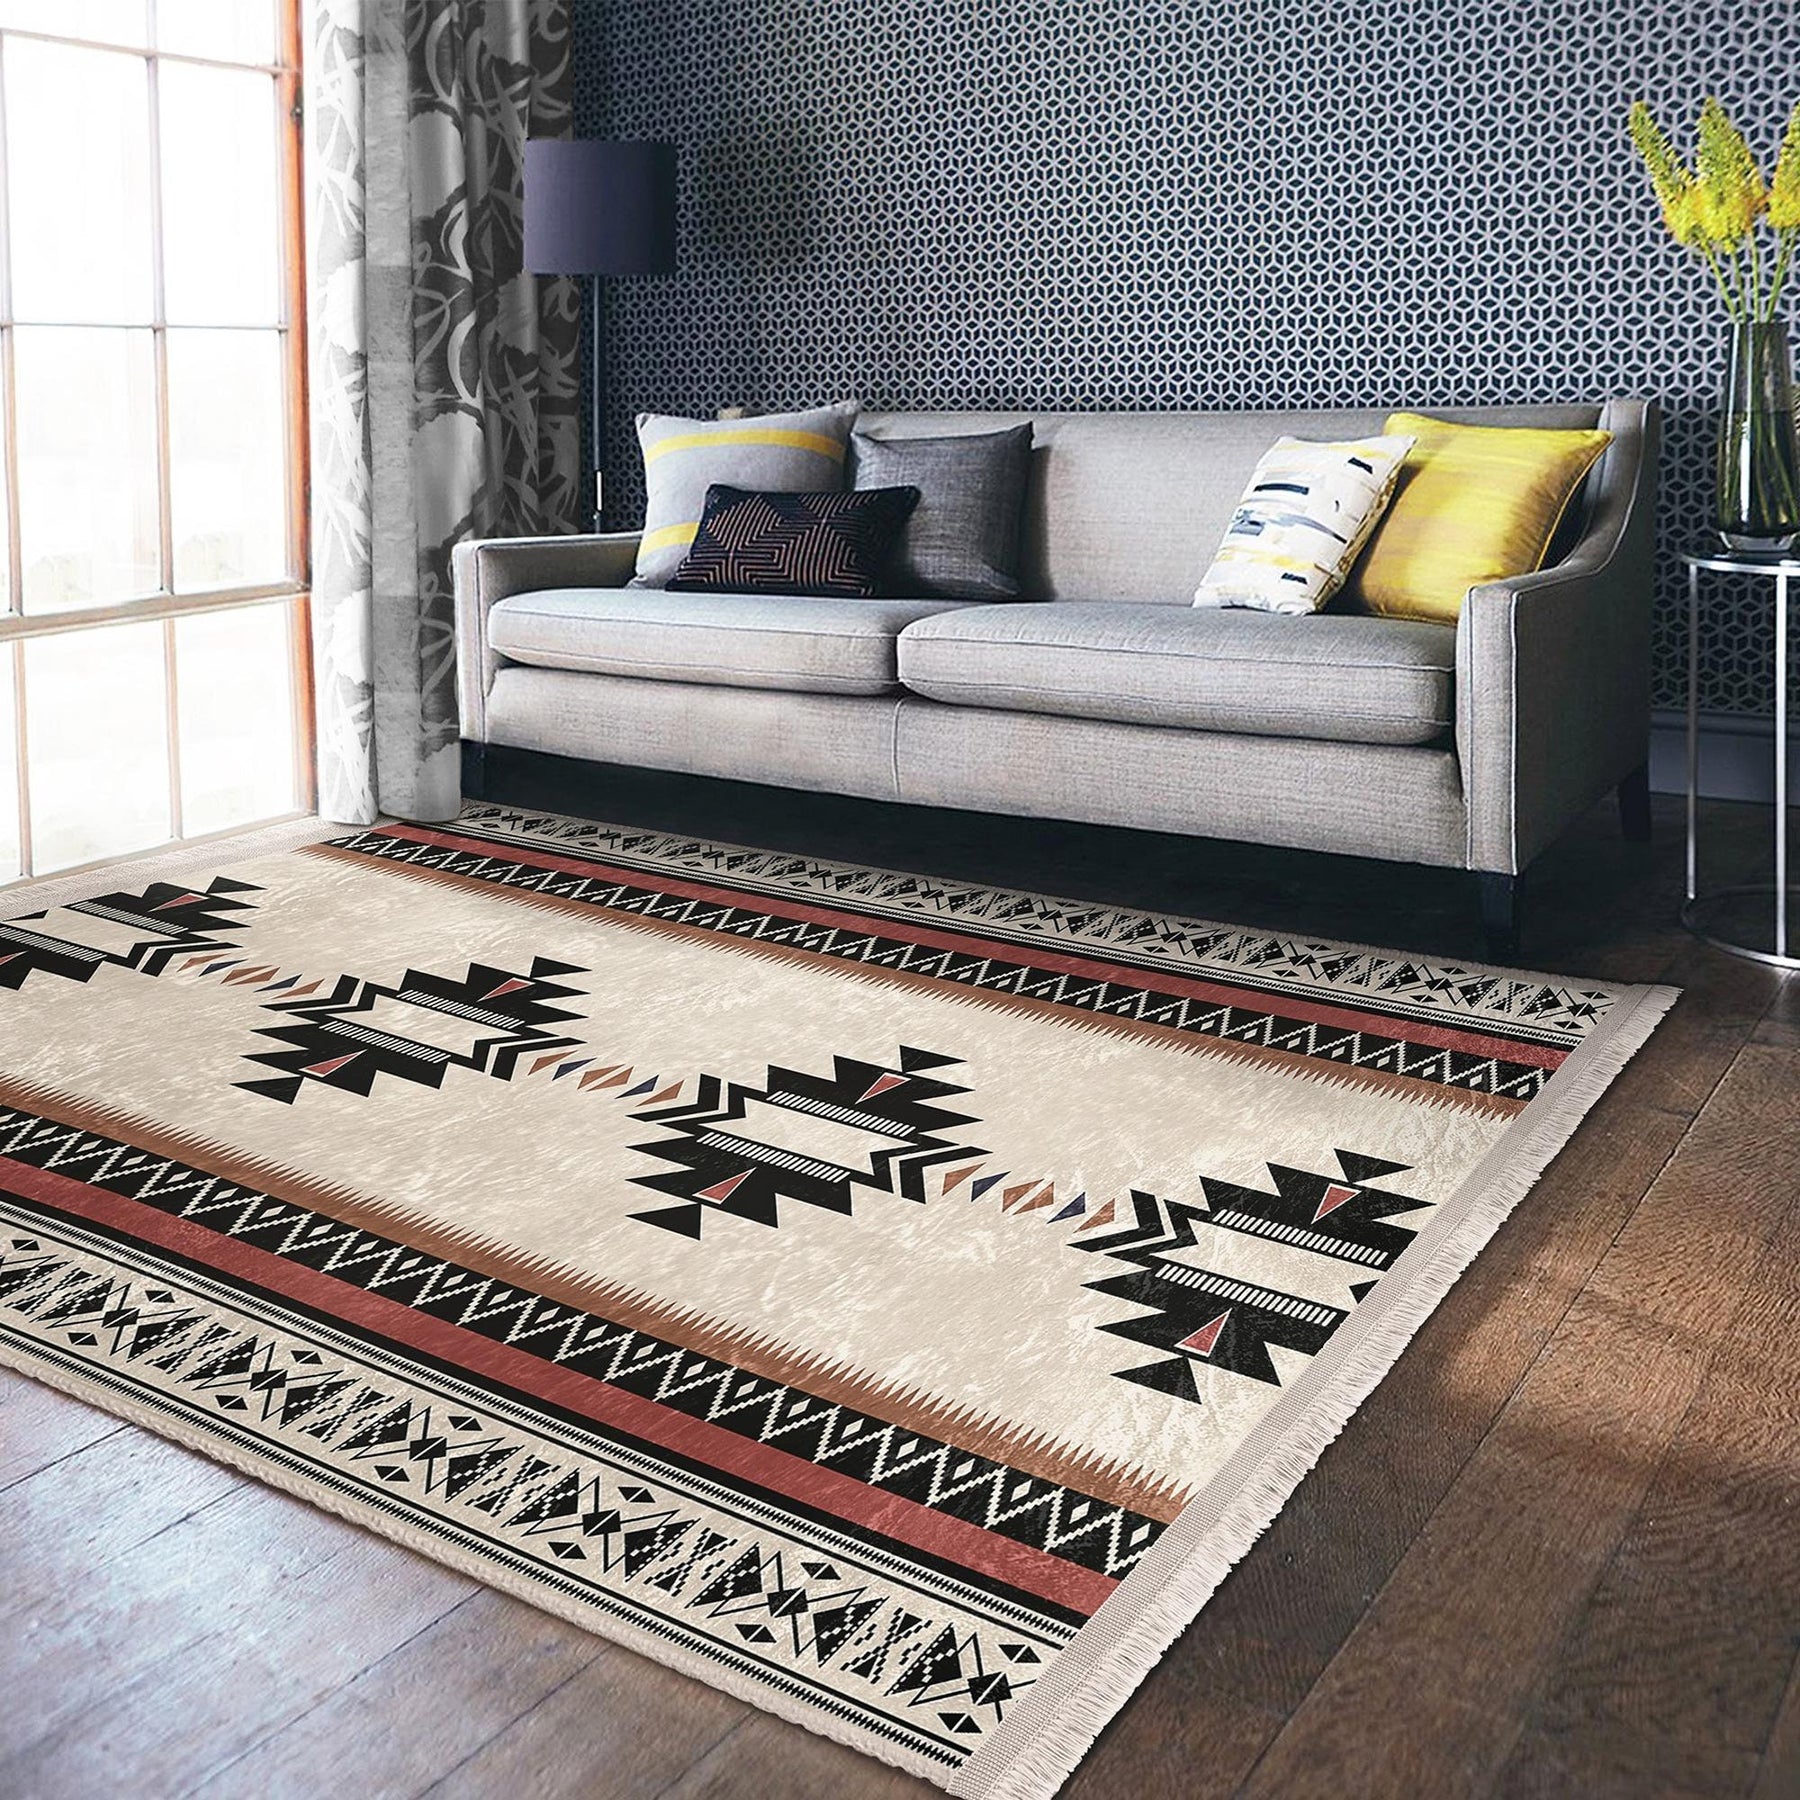 Wool Carpet Aztec 170 cm x 115 cm - Southwestern - Ethnic Design